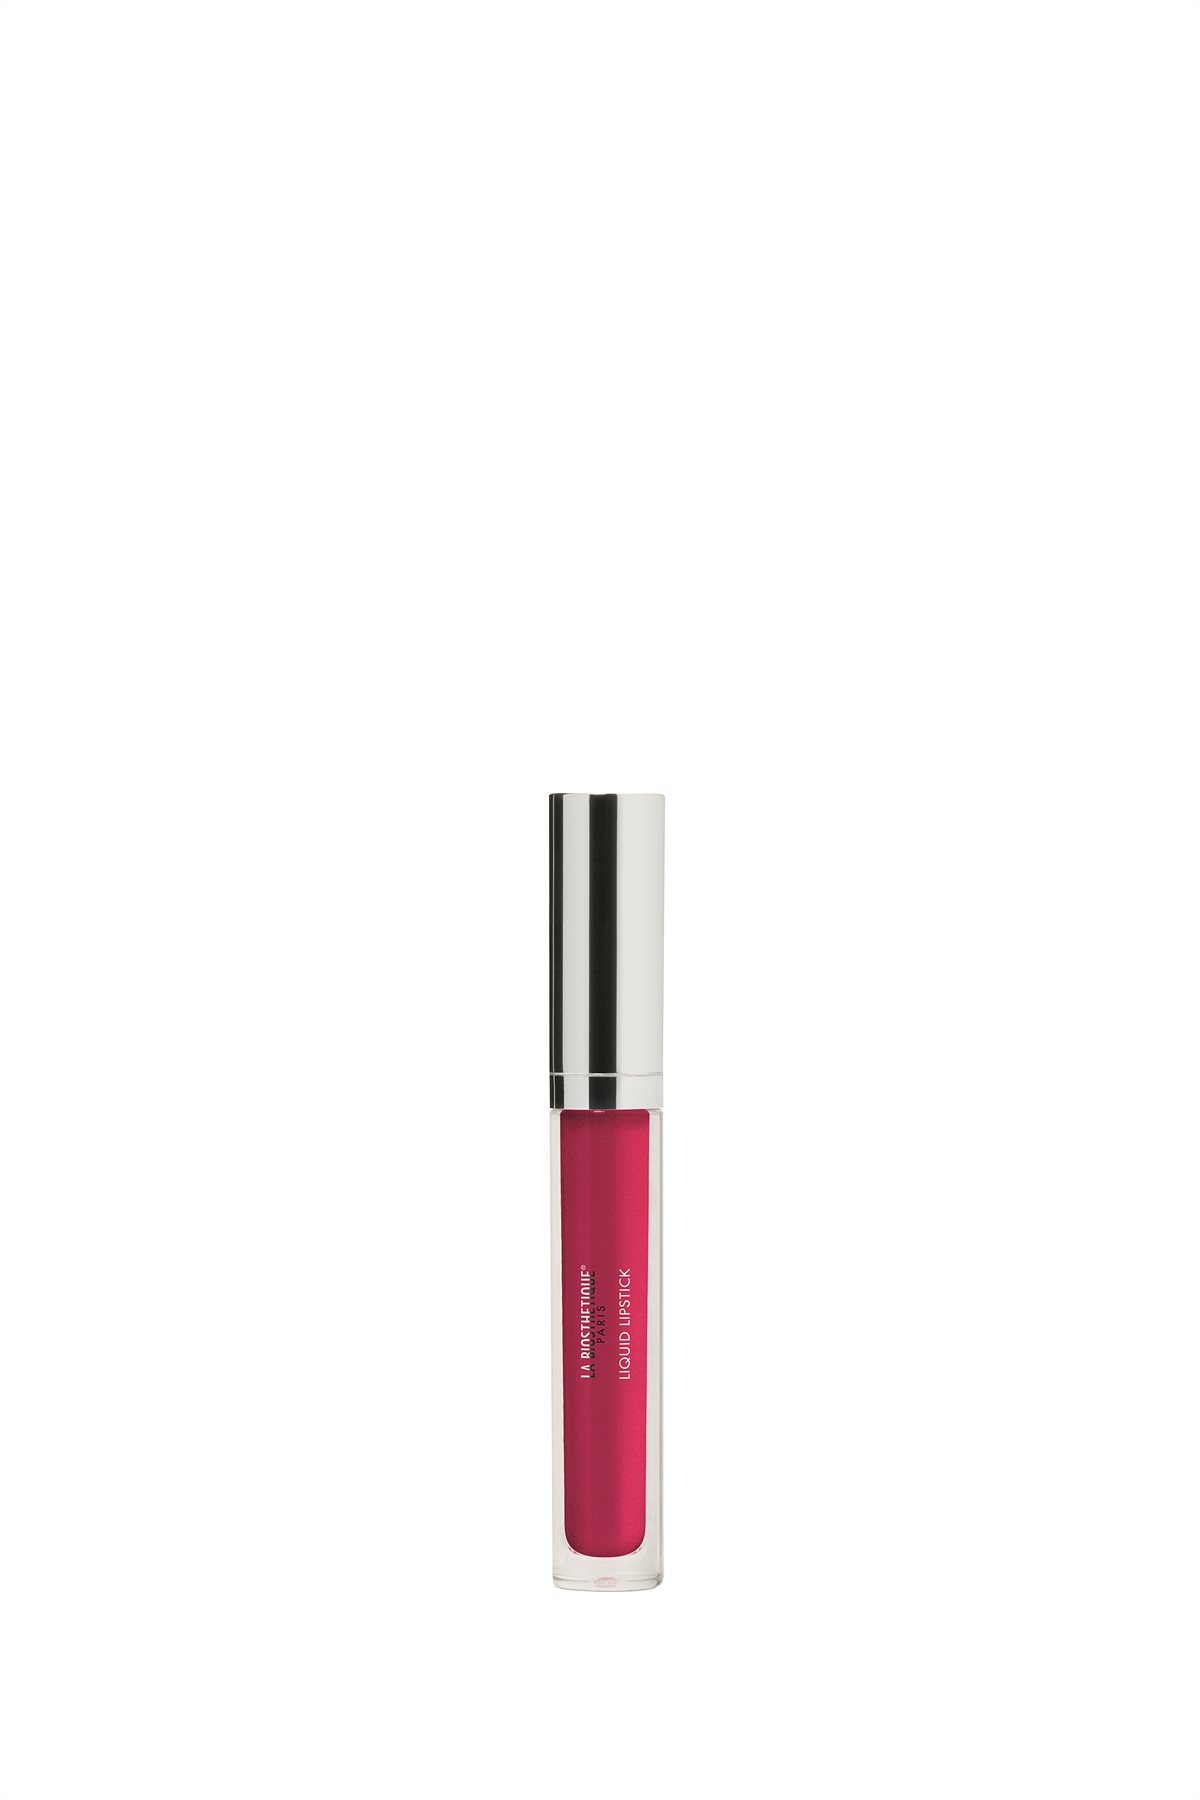 La Biosthétique_liquid lipstick sweet raspberry_EUR 22,-